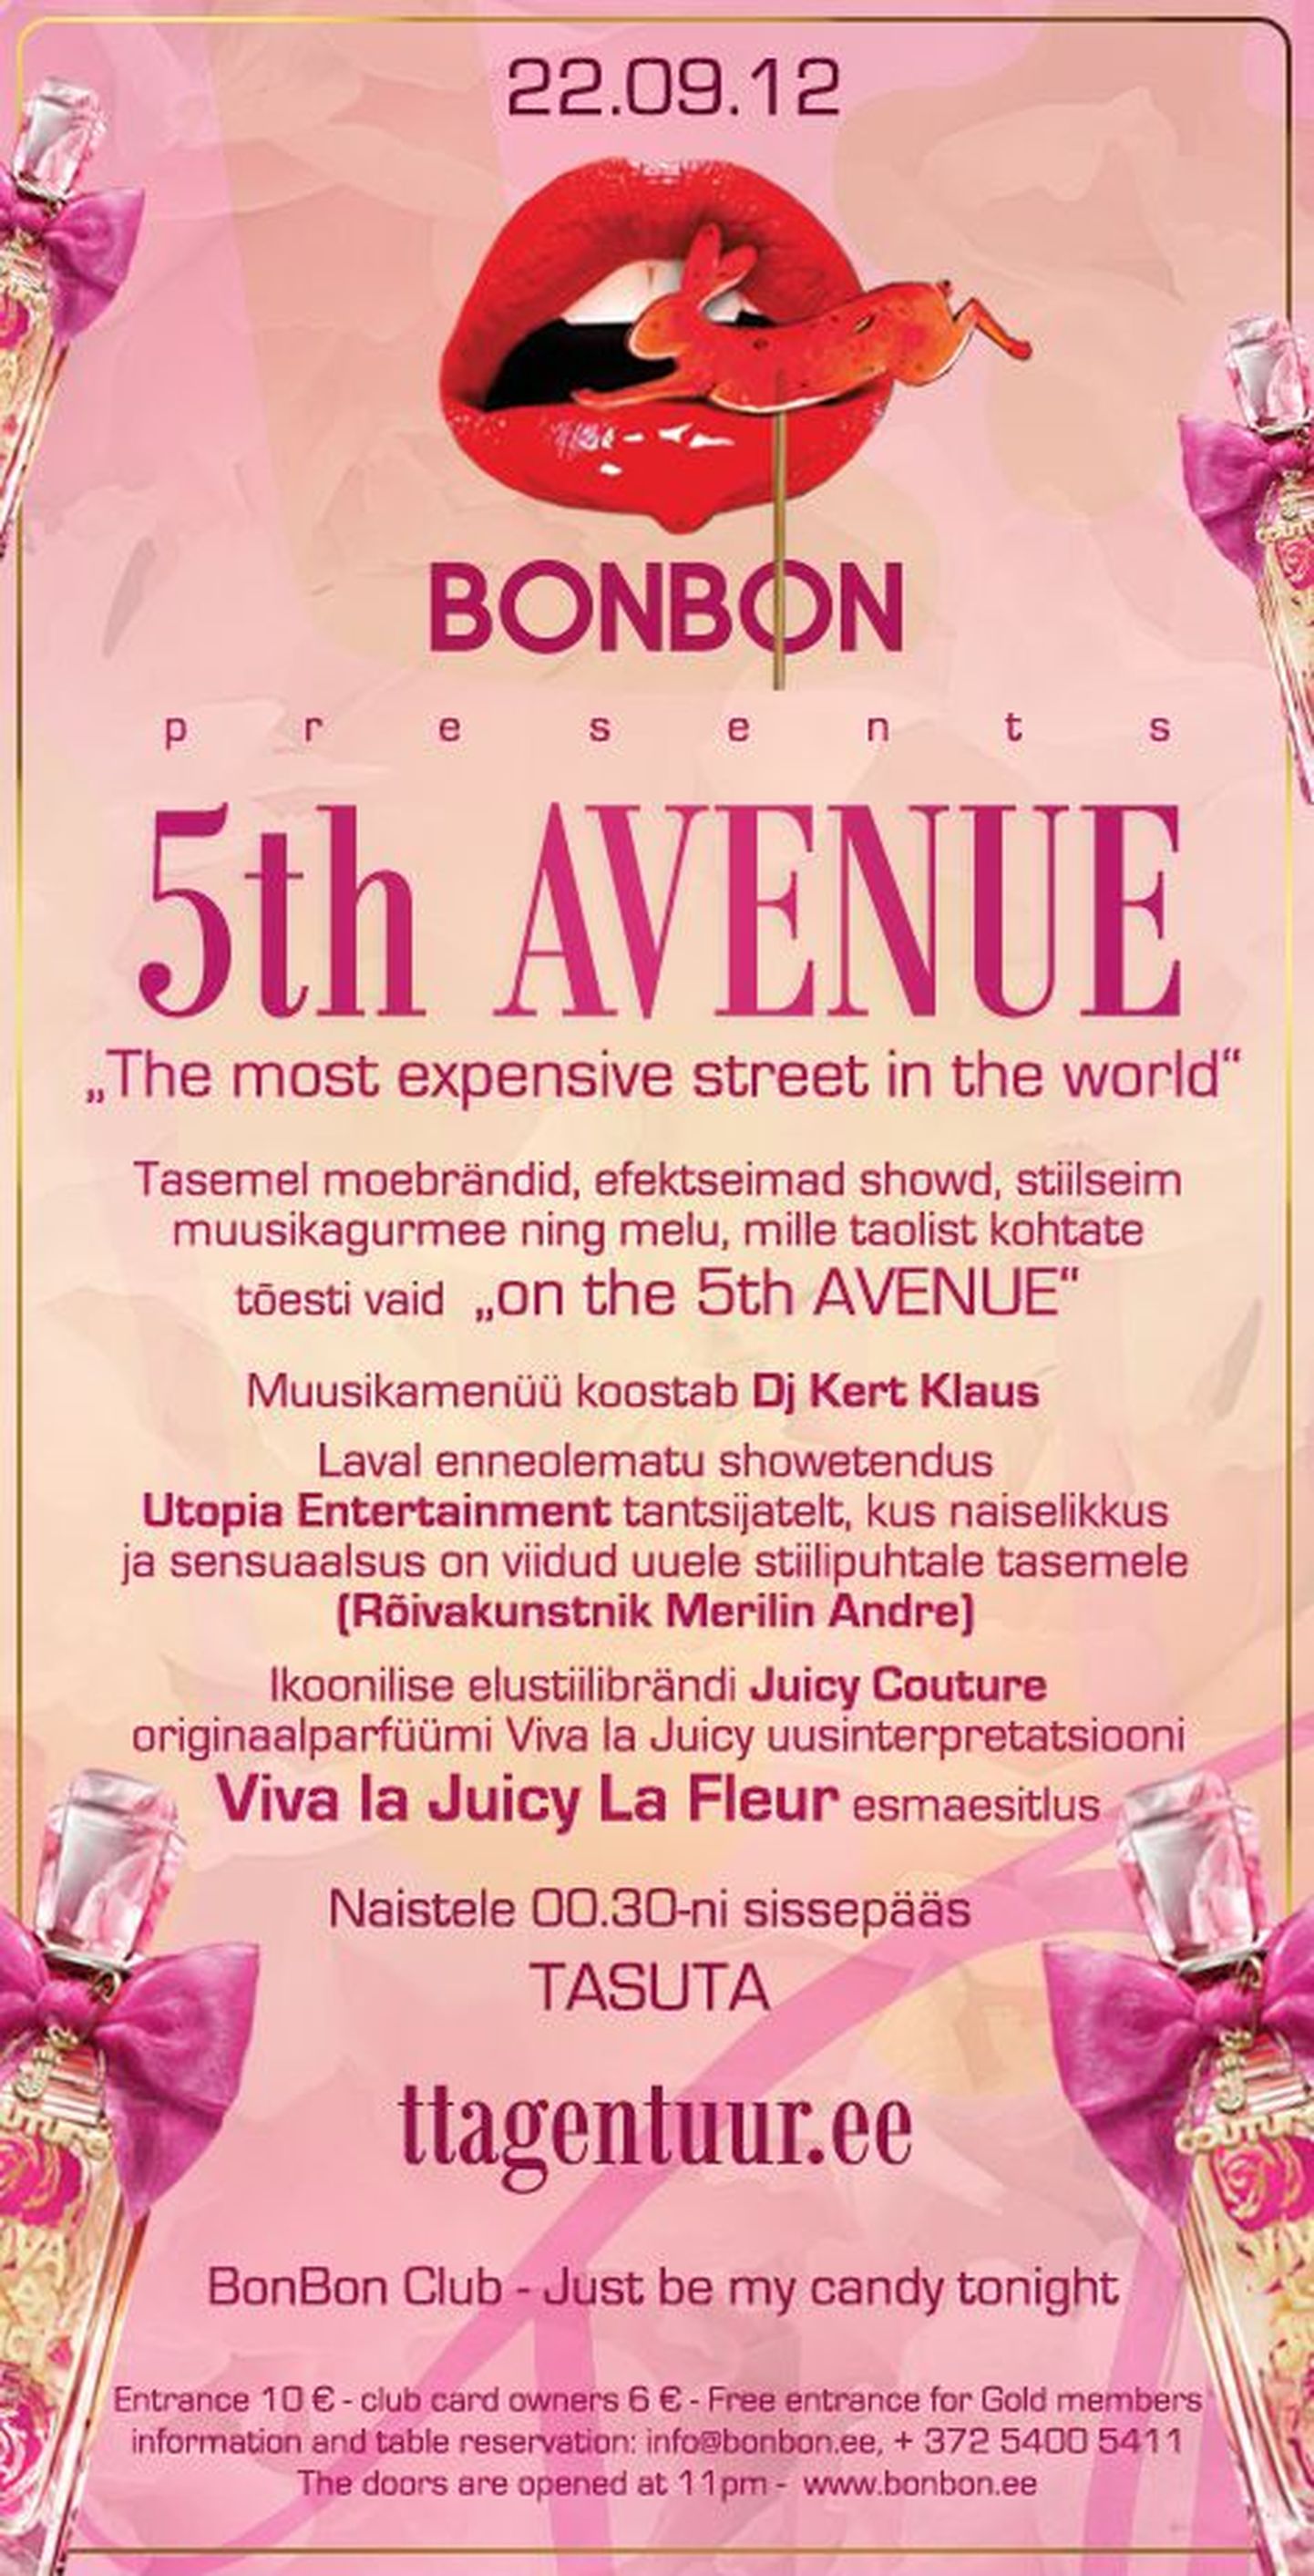 22.septembril toimub ööklubis Tallinna BonBon edukas ning melukas üritustesari 5th AVENUE
„The most expensive street in the world“